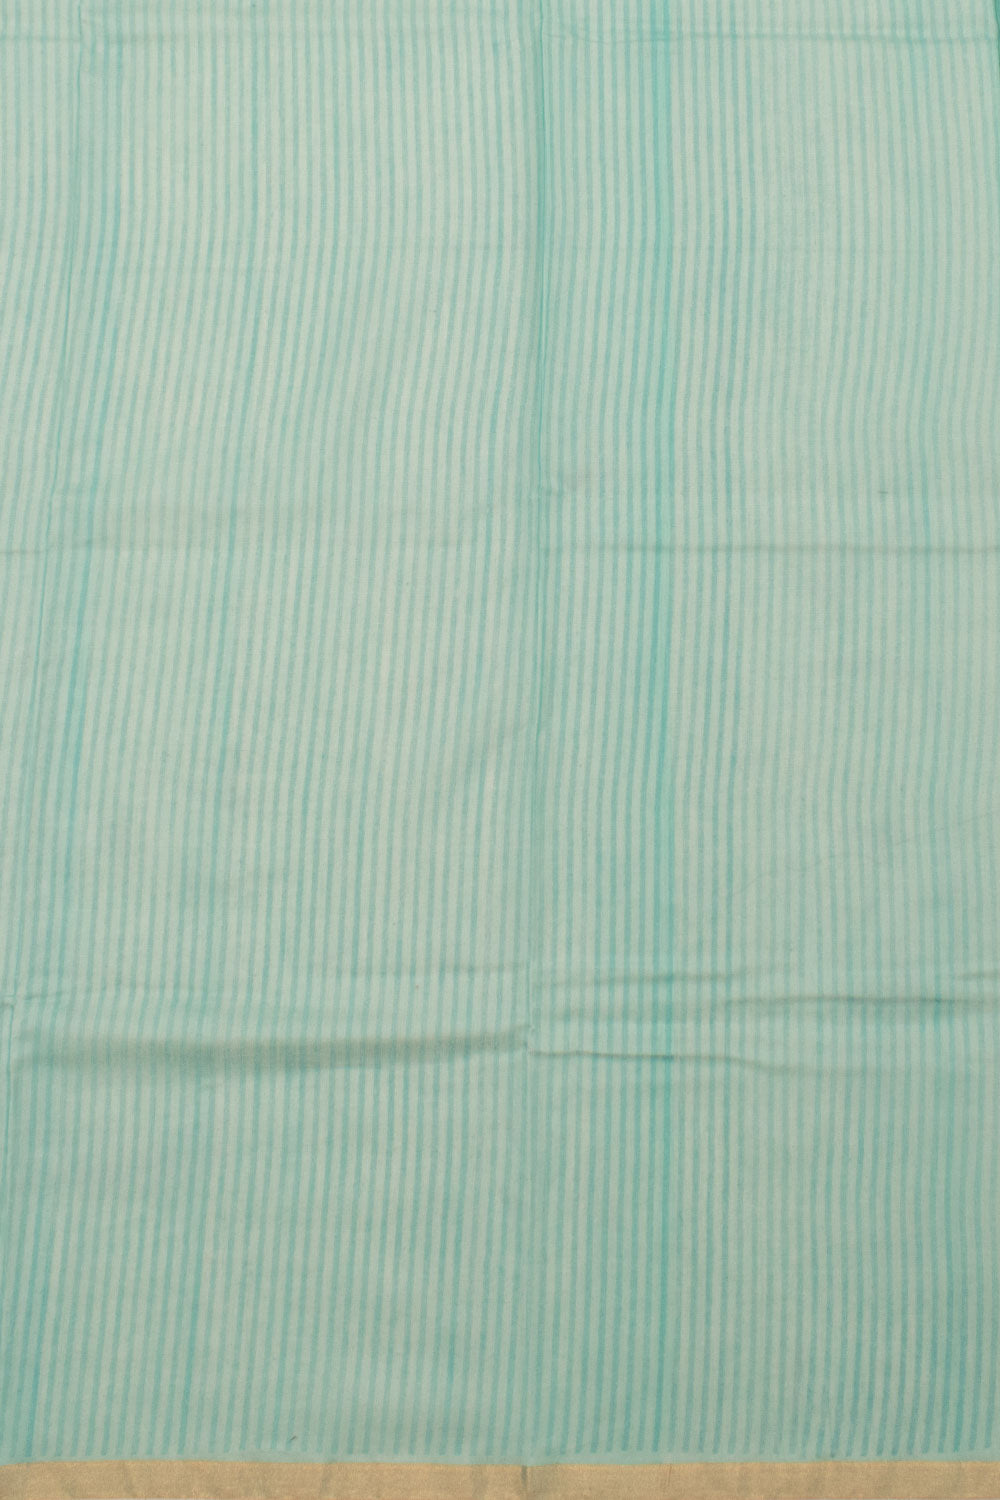 Aqua Green Printed Chanderi Silk Cotton Saree 10059690